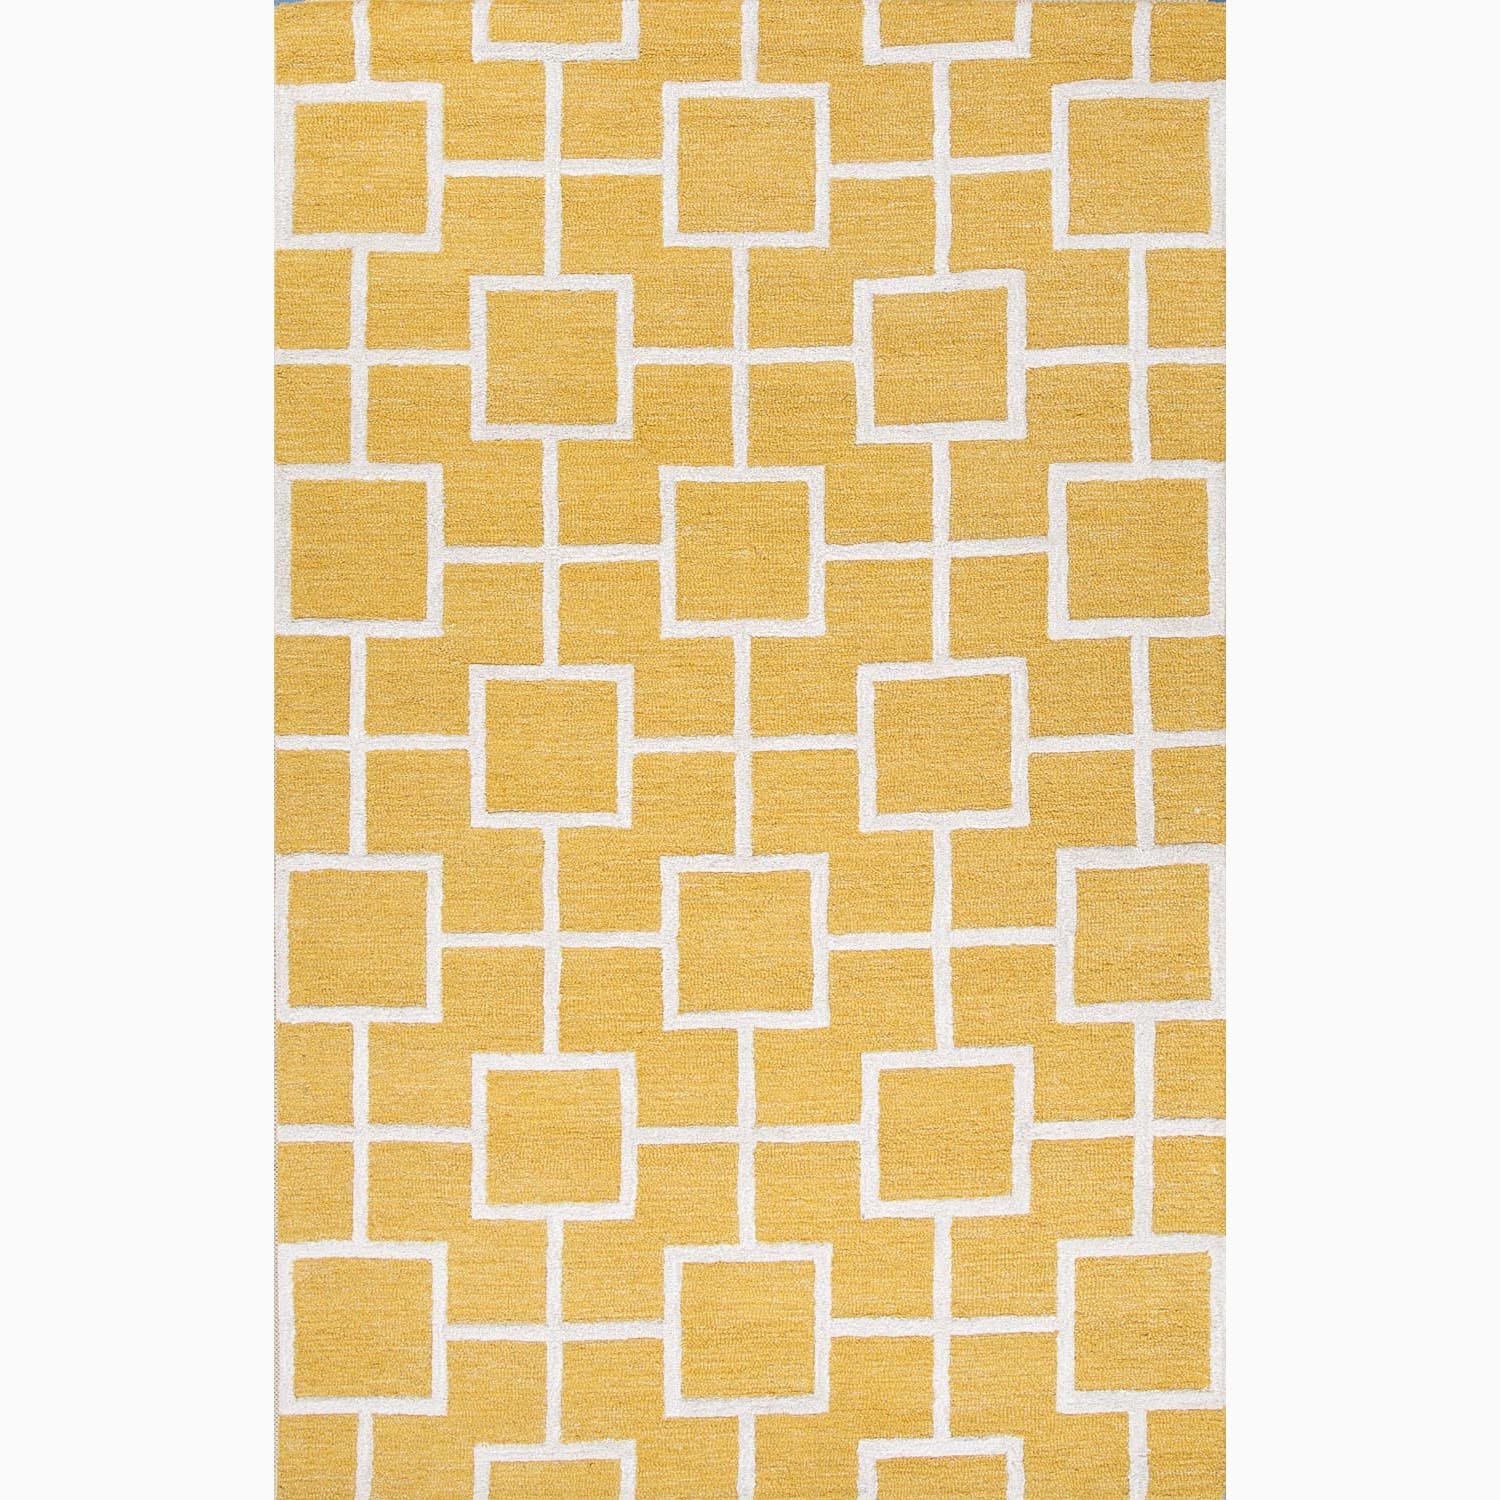 Hand made Yellow/ Ivory Wool/ Art Silk Textured Rug (3.6x5.6)